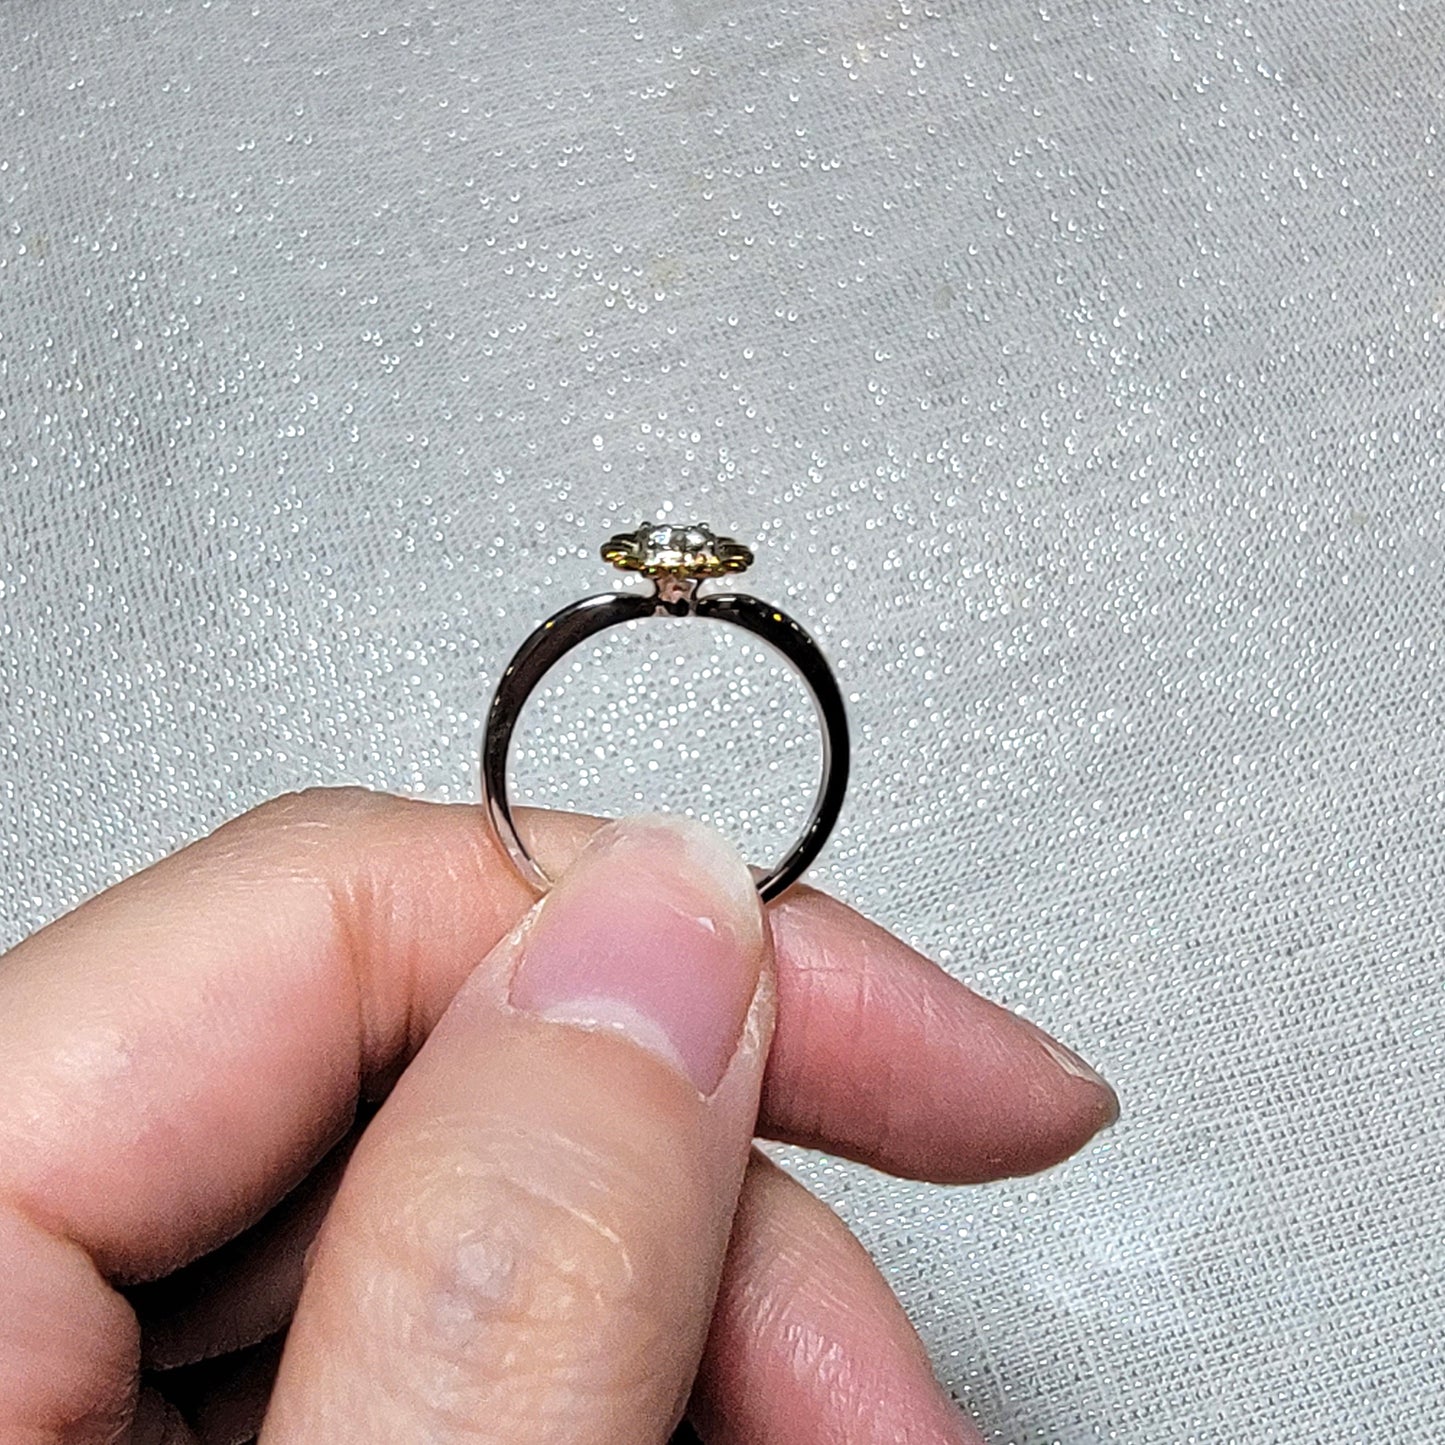 Sun Flower Diamond Floral Ring